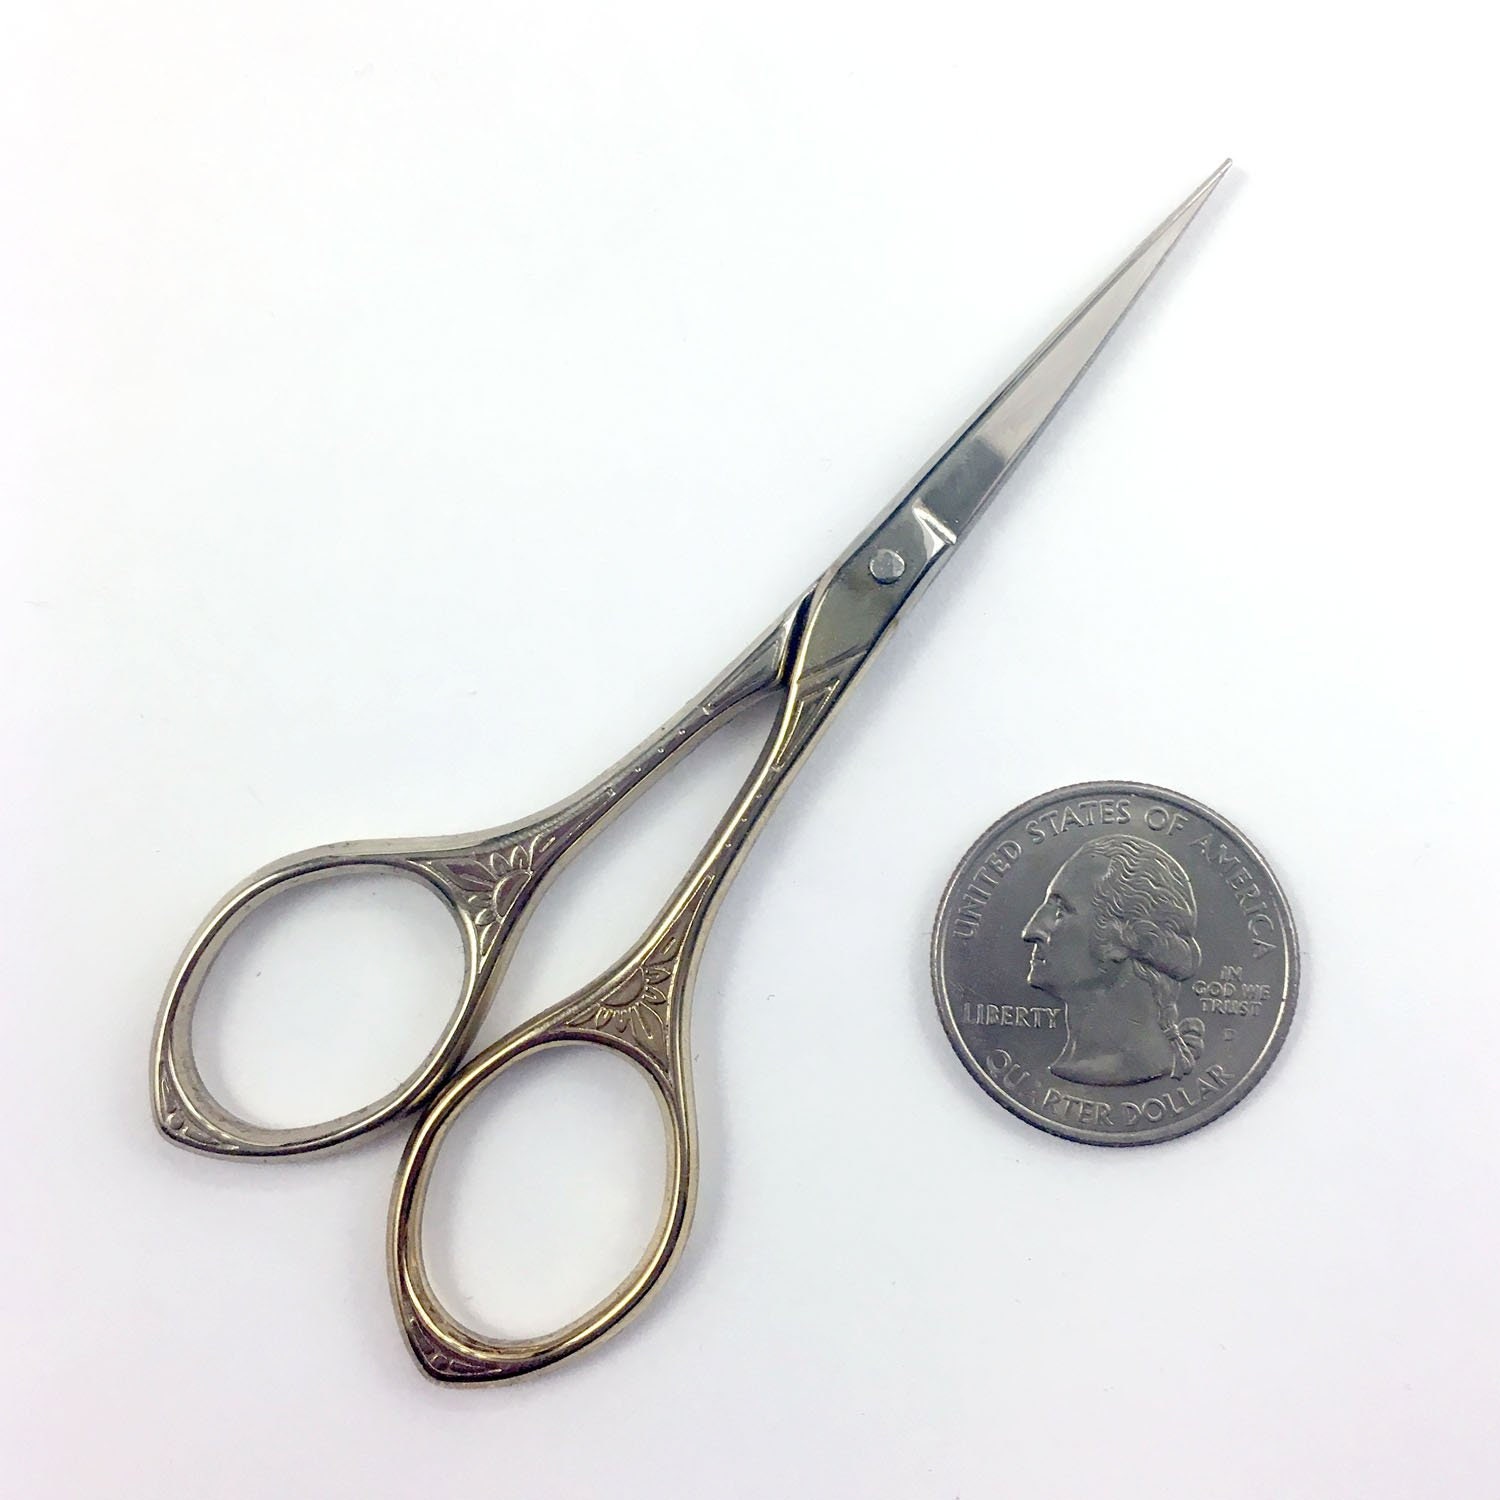 Sharp 4.5 Inch Embroidery Scissors, TSA Approved Scissors, One